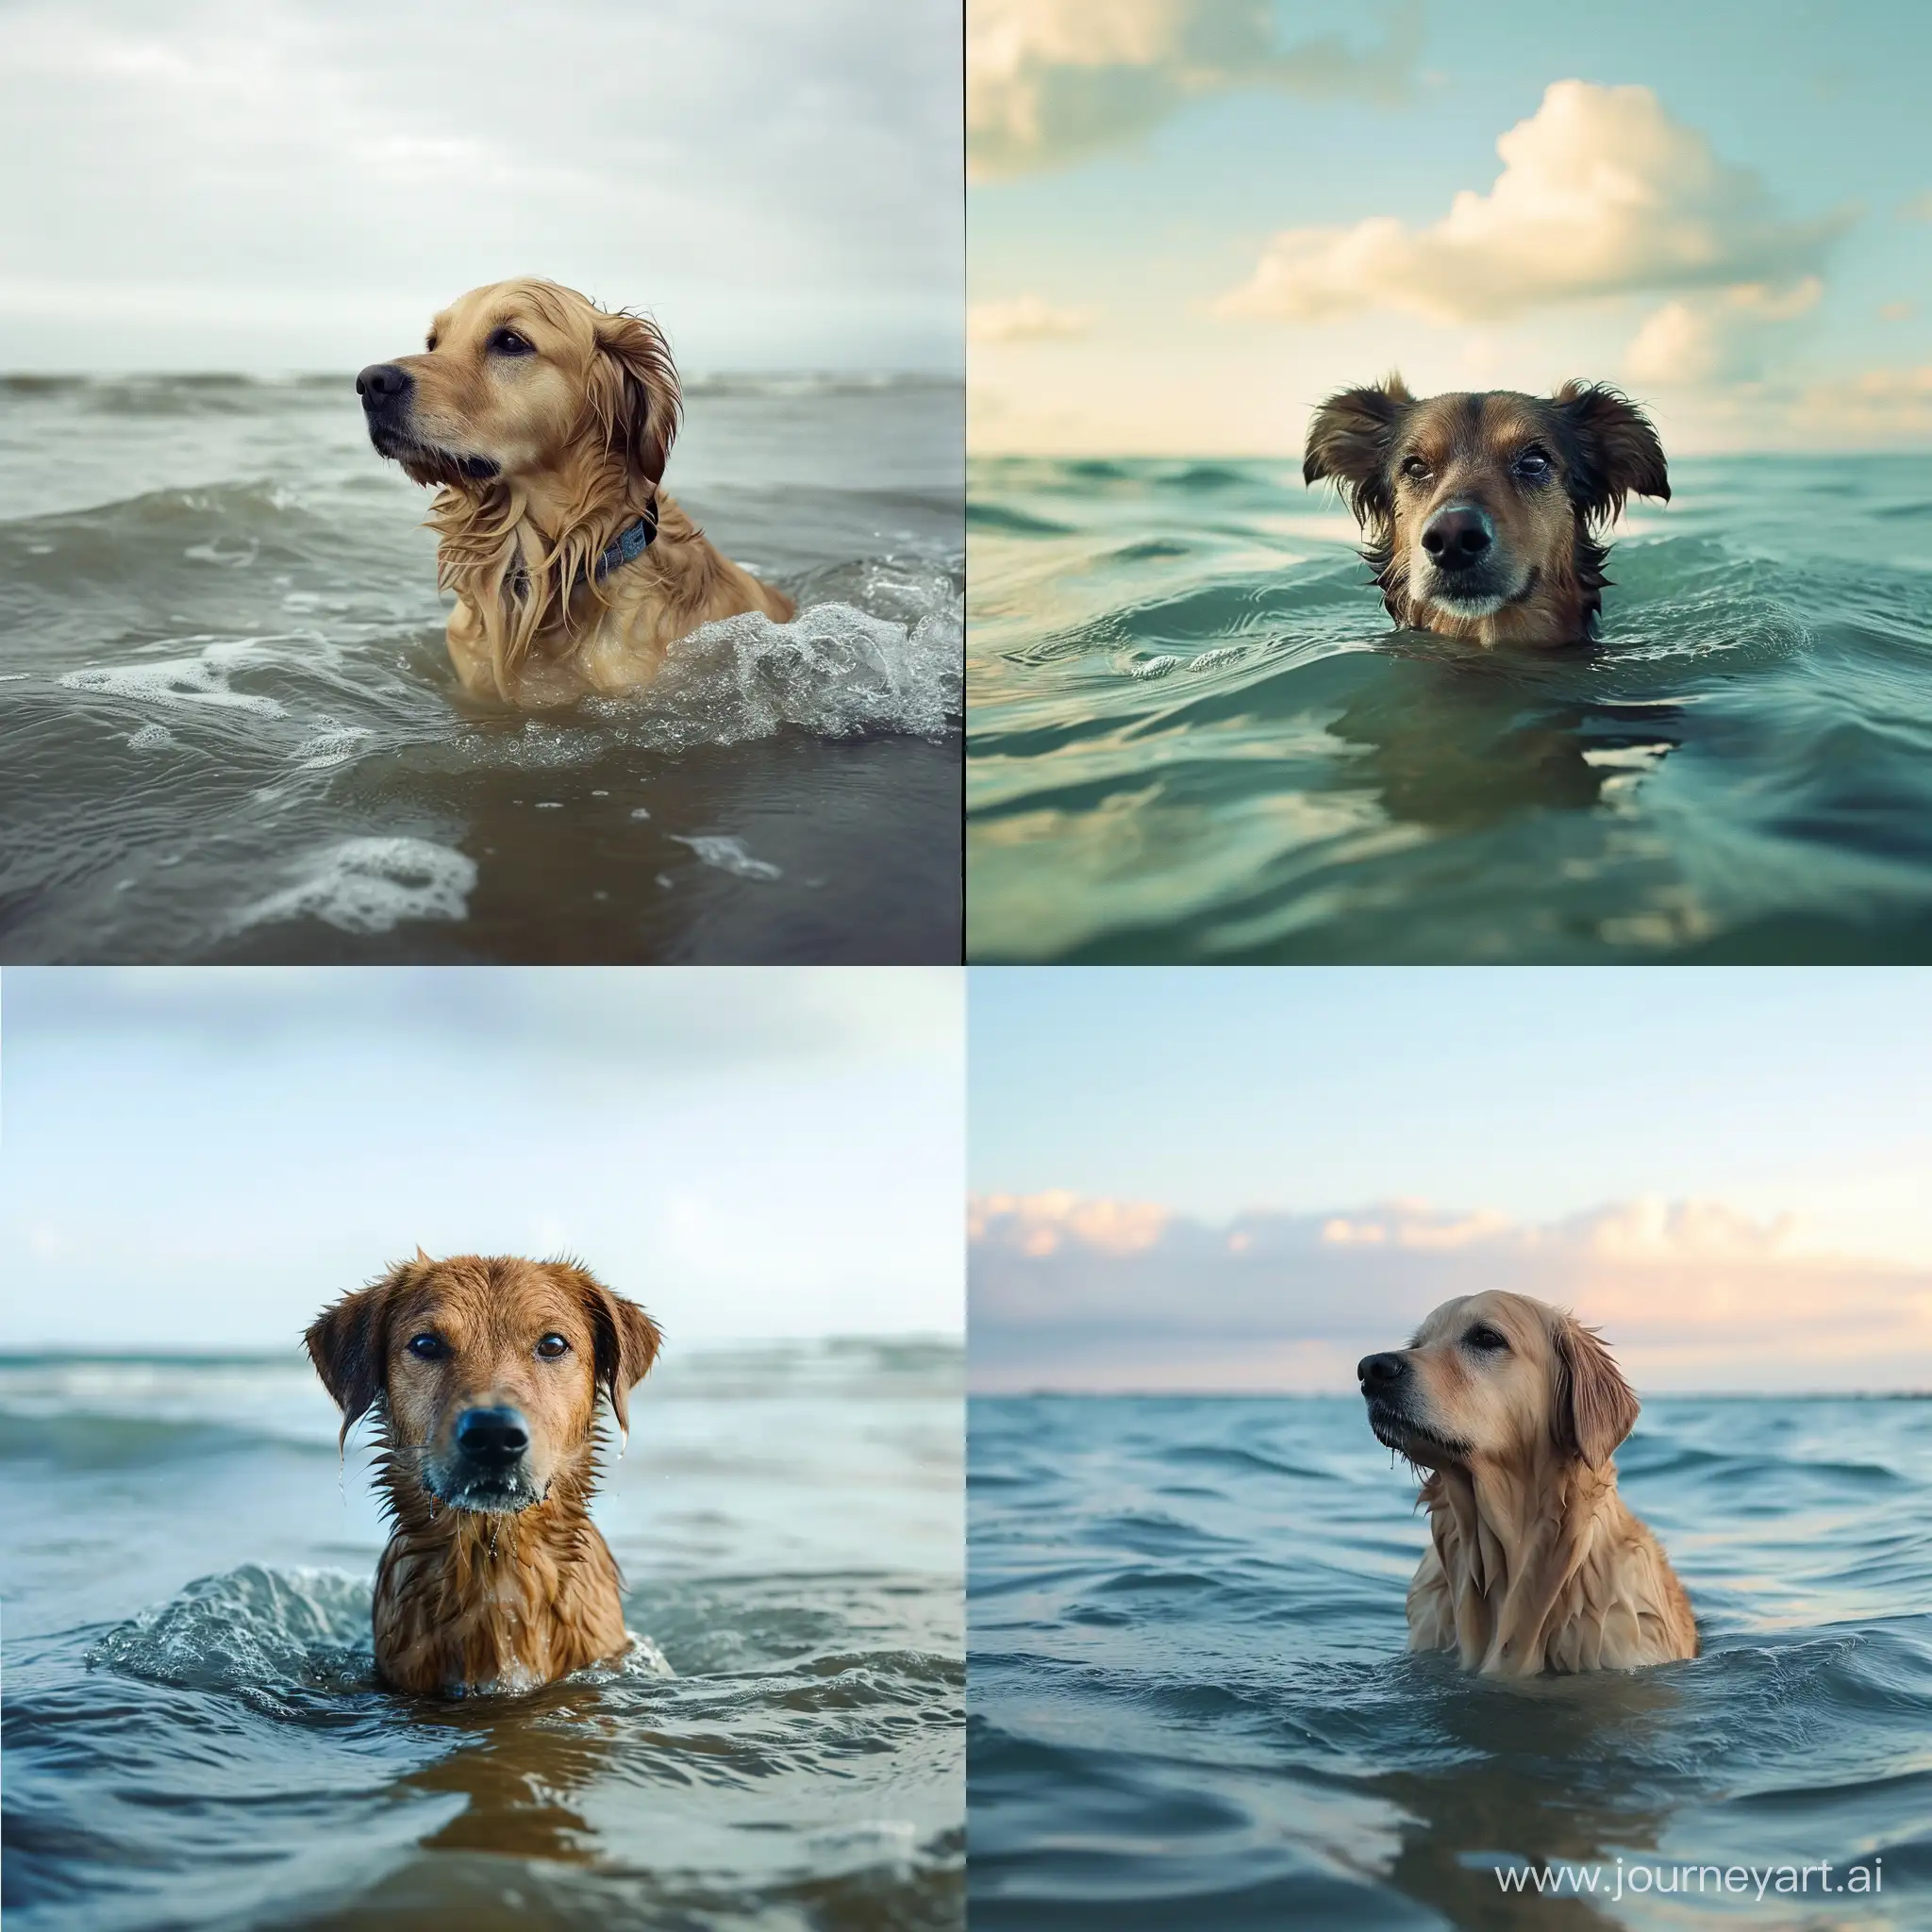 Playful-Dog-Enjoying-the-Ocean-Waves